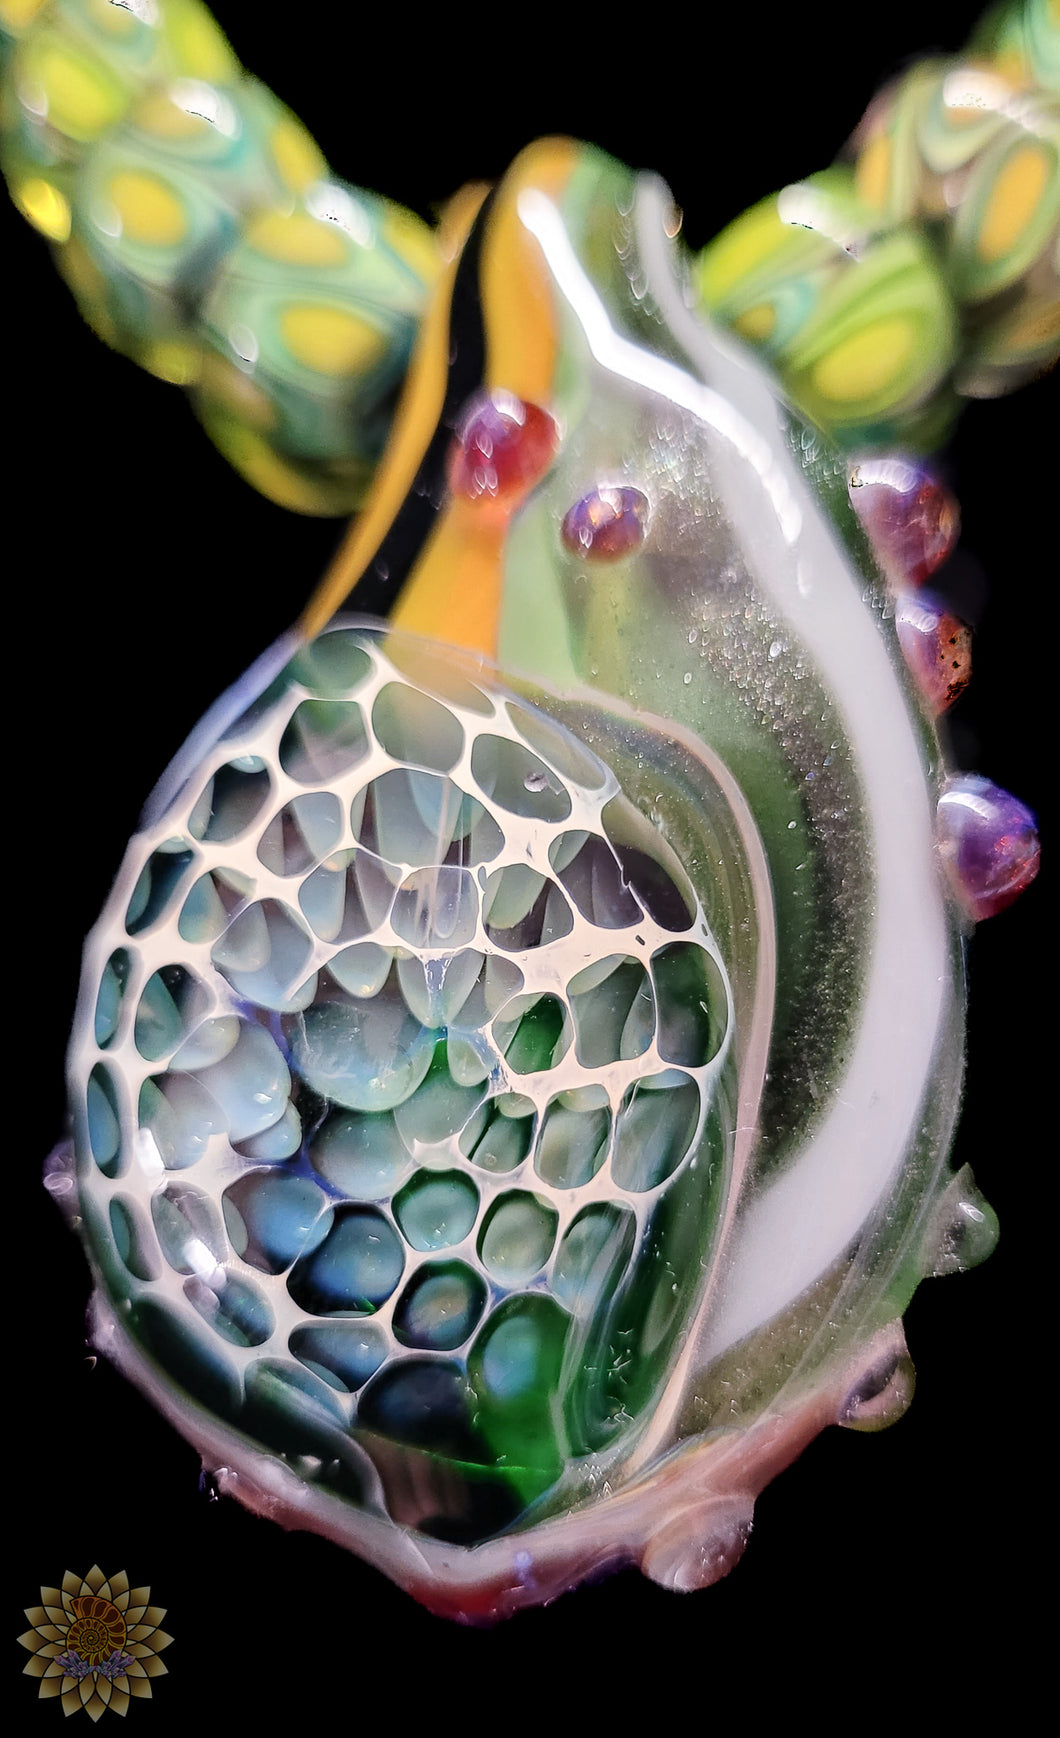 Hand-blown Glass Pendant & Beads